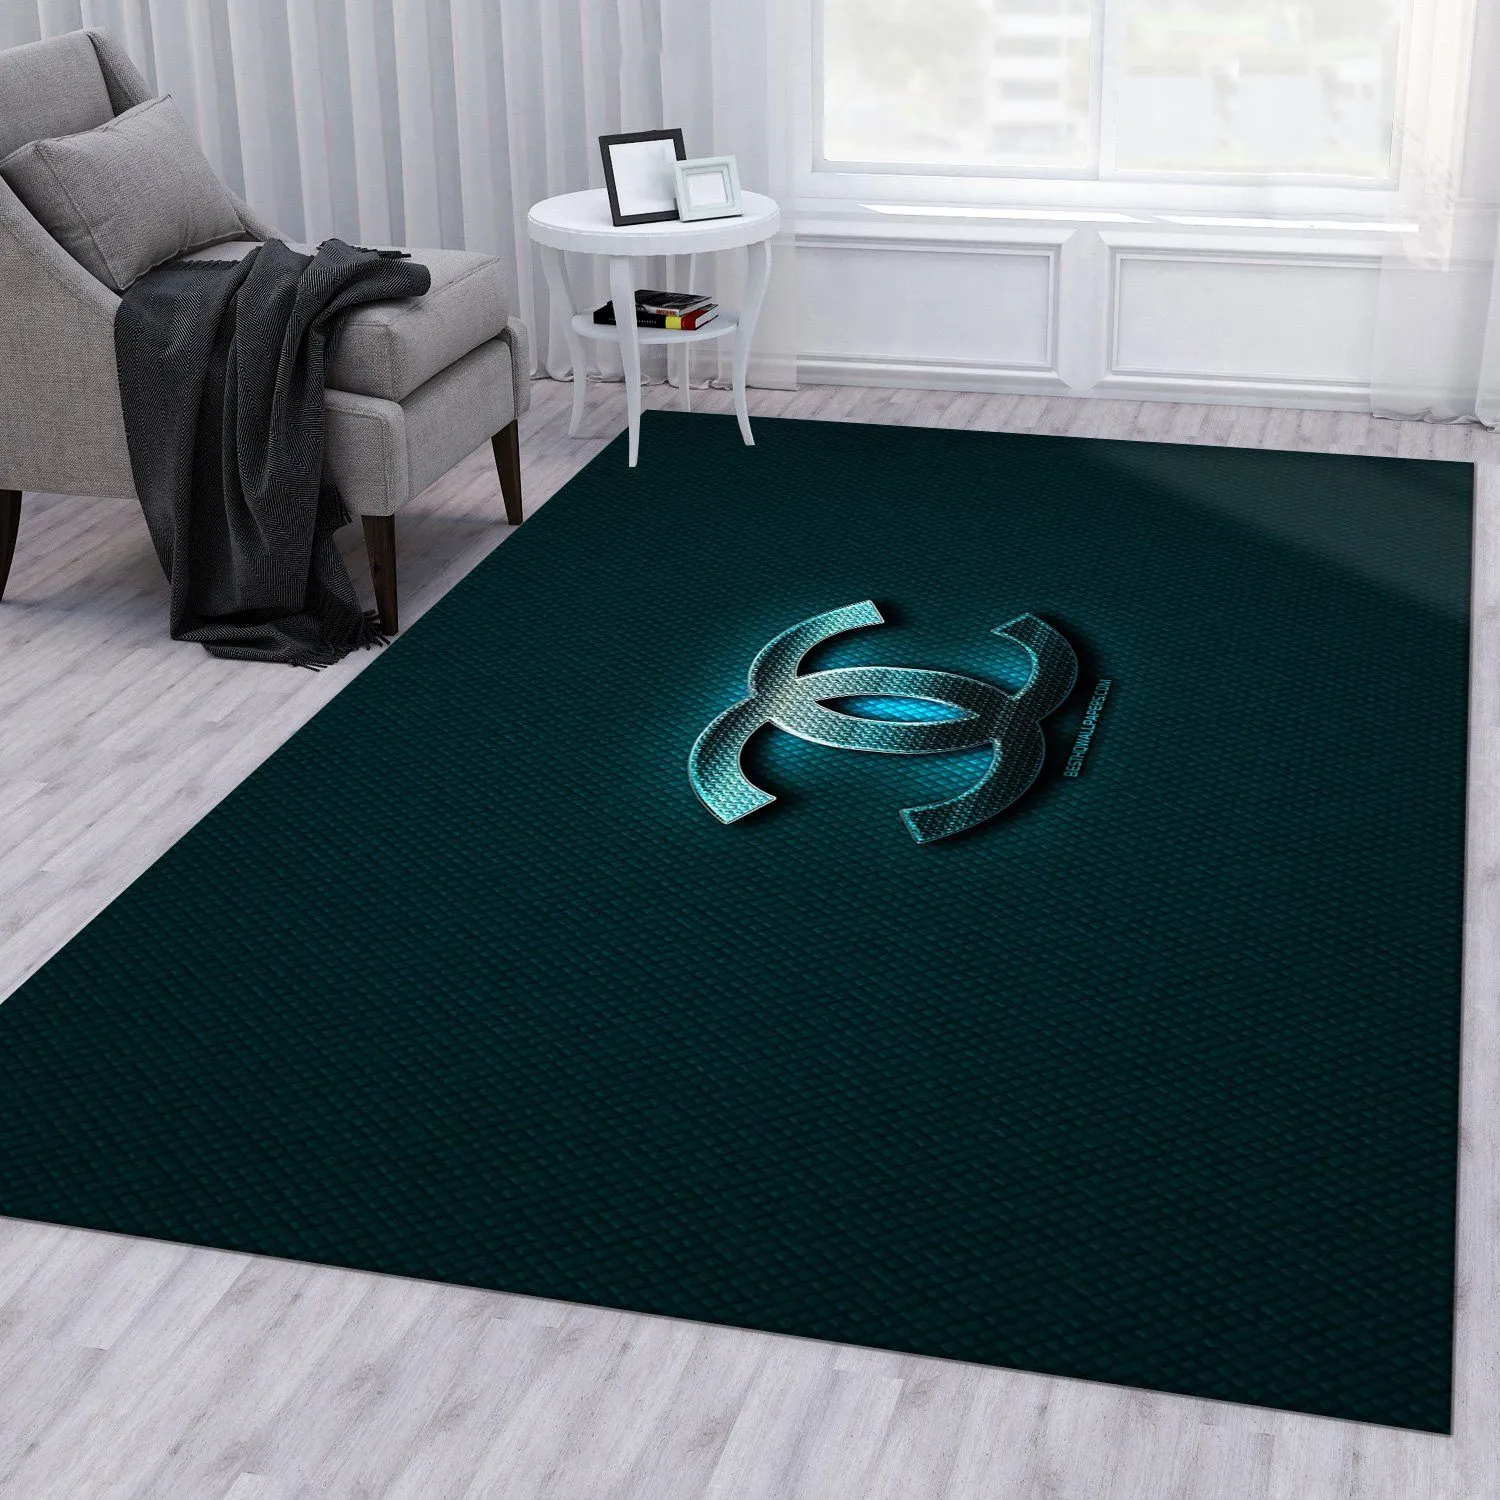 Chanel Rectangle Rug Fashion Brand Home Decor Luxury Area Carpet Door Mat